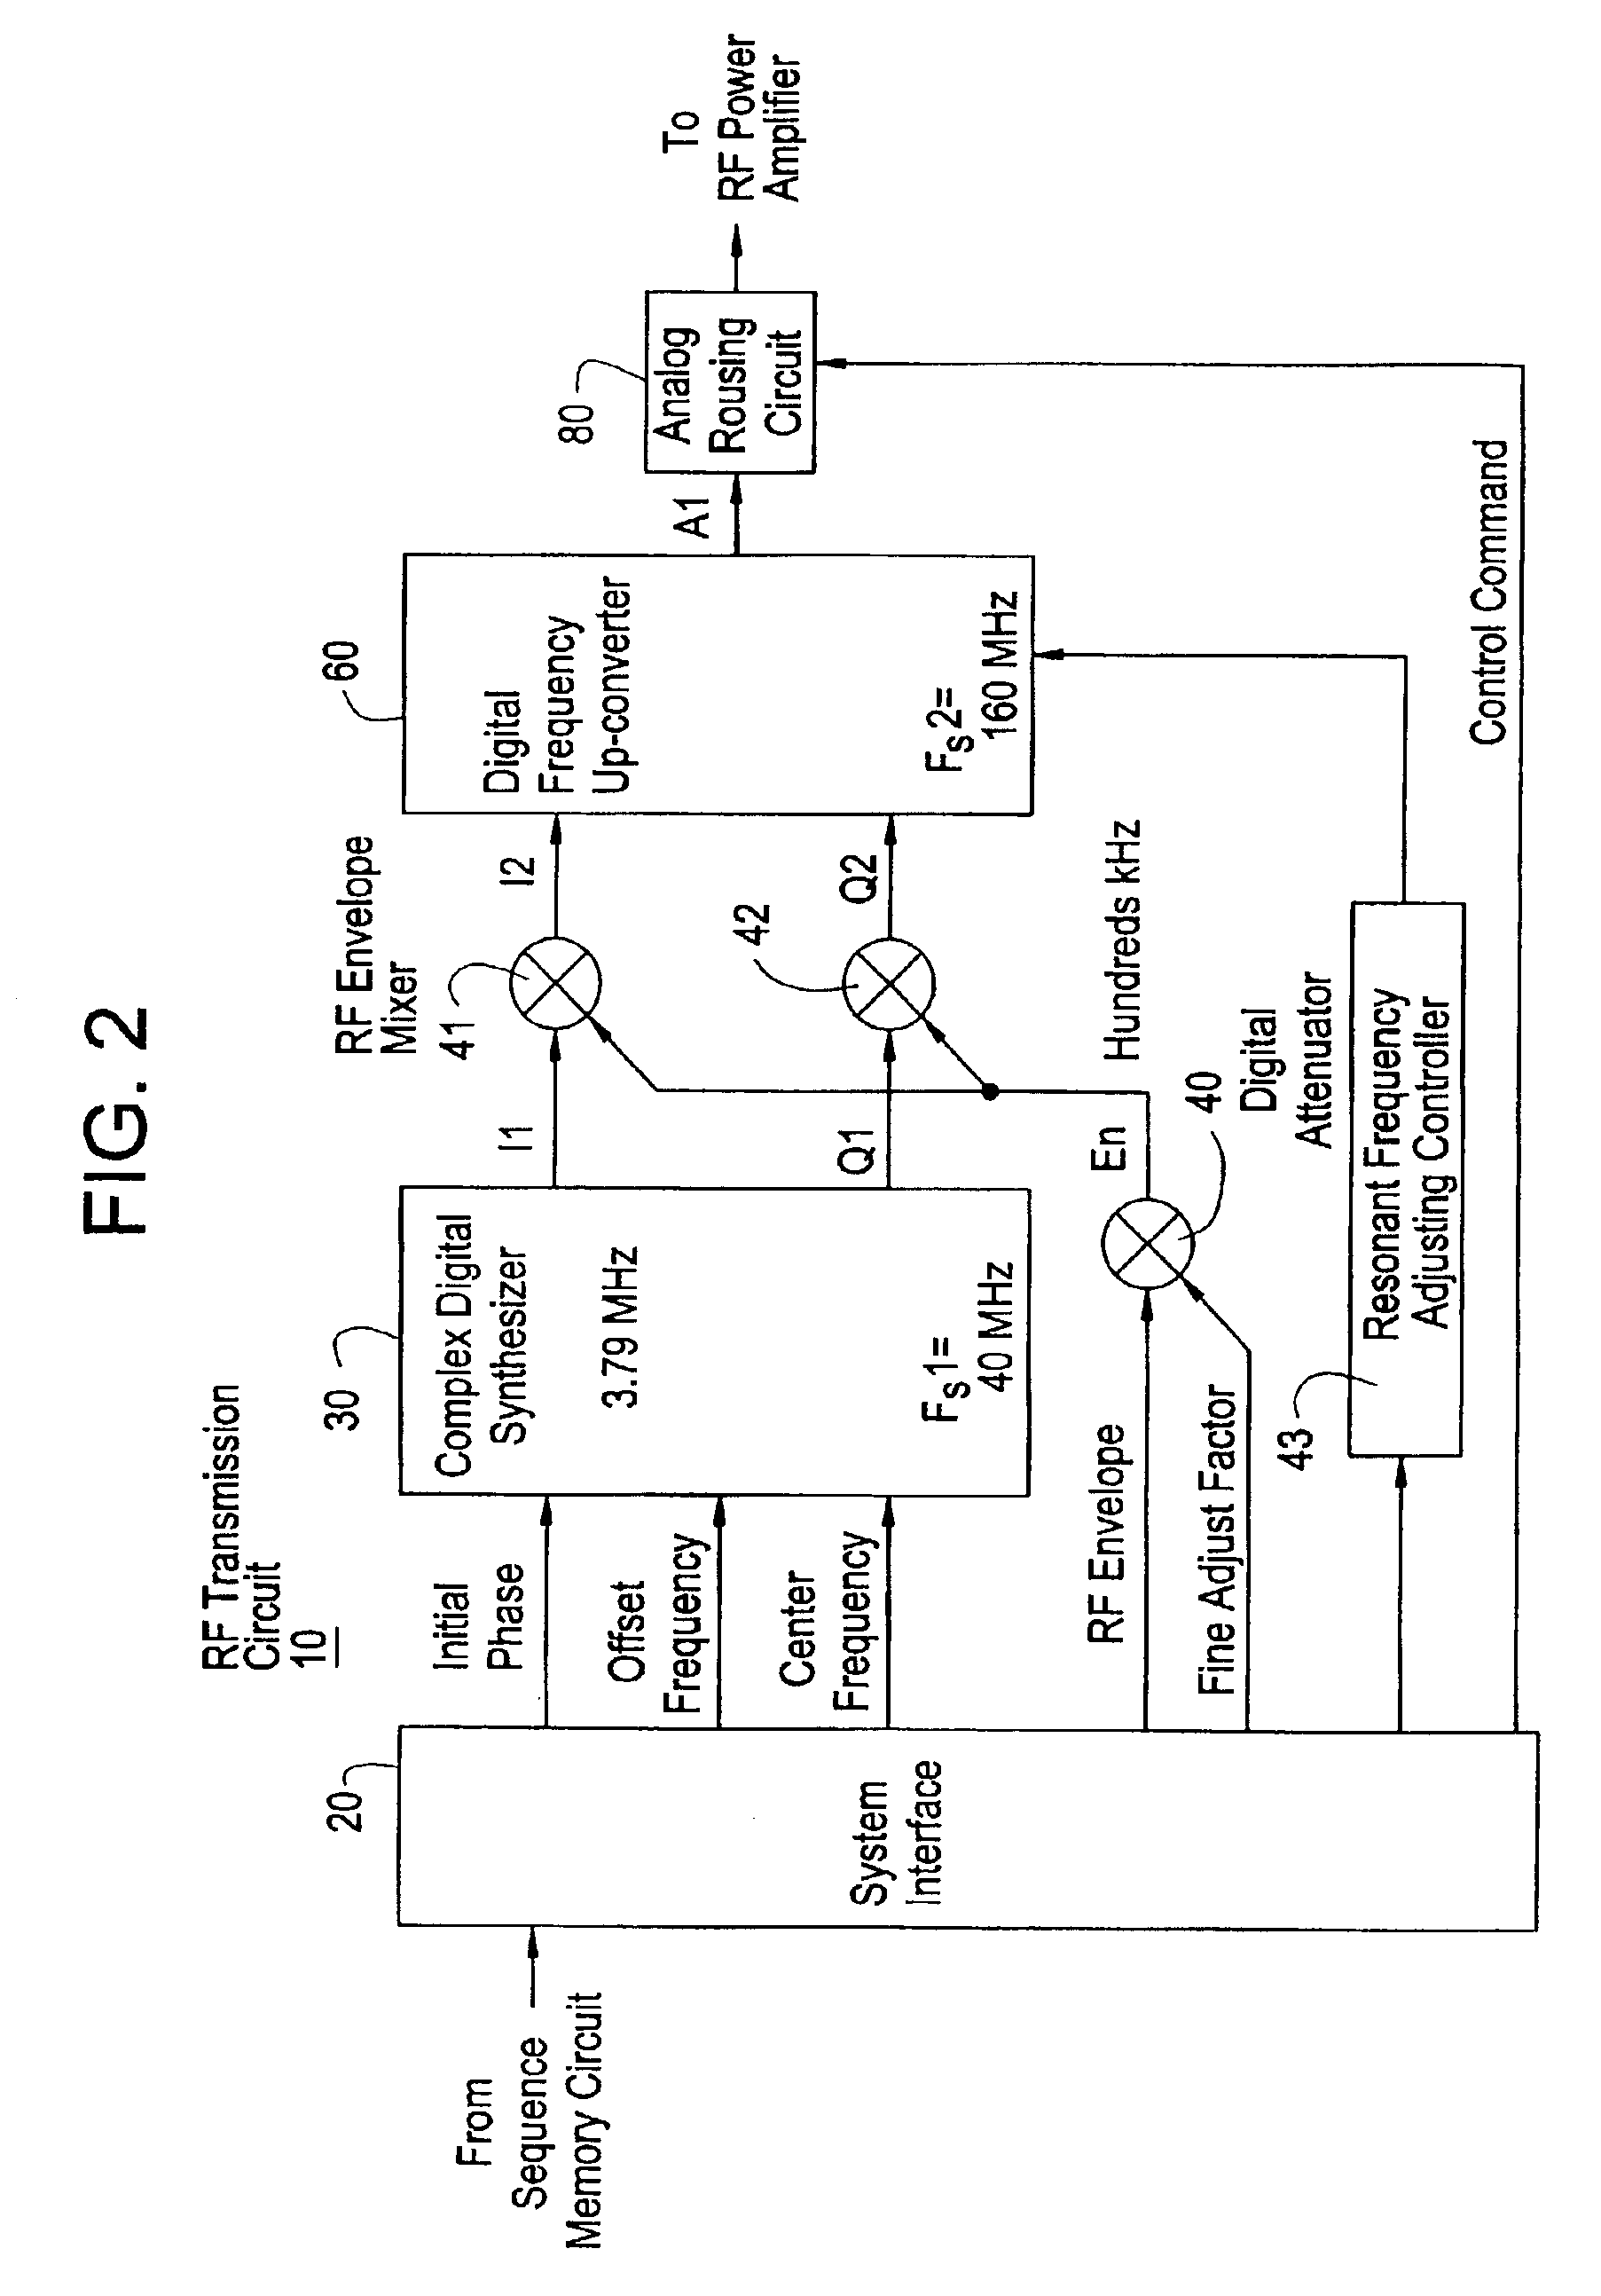 RF transmission circuit, complex digital synthesizer, and MRI apparatus